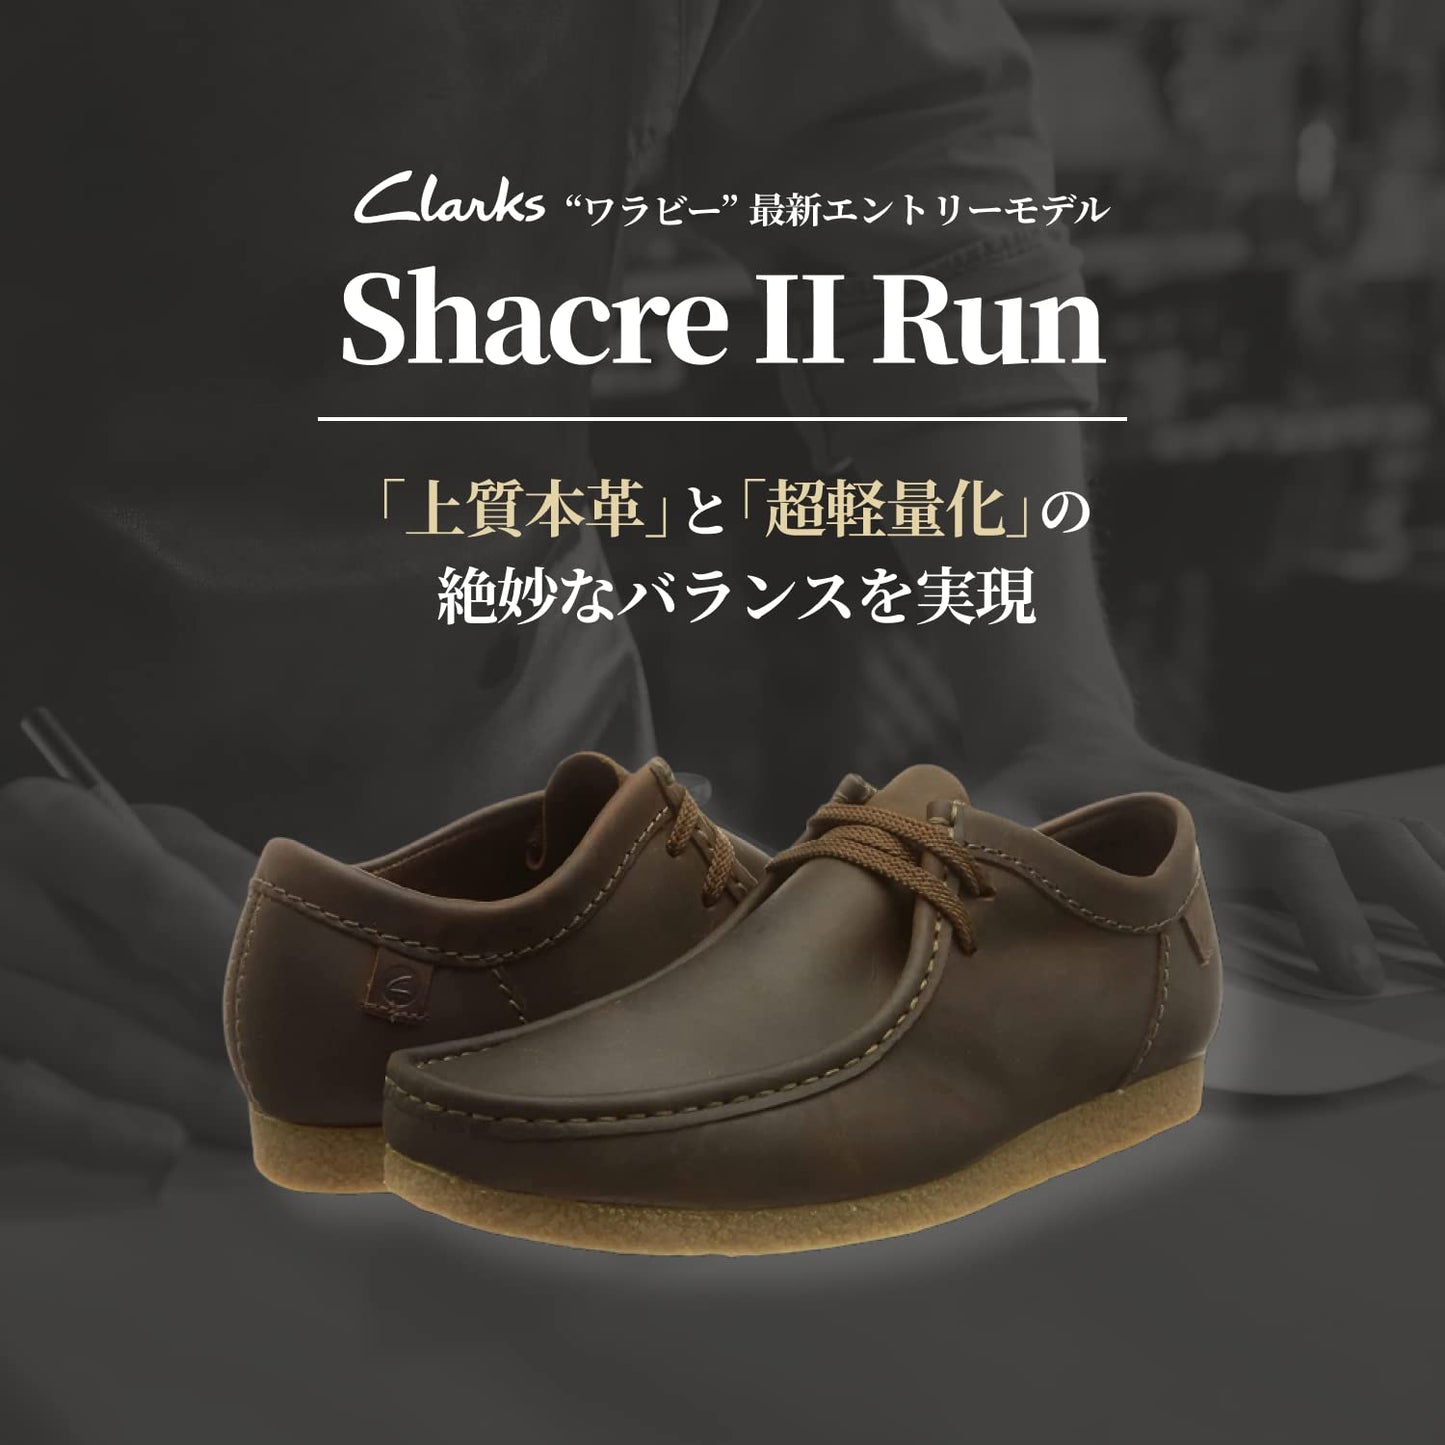 Clarks Shacre II Run Tan Tumbled (26159431) UK-11 